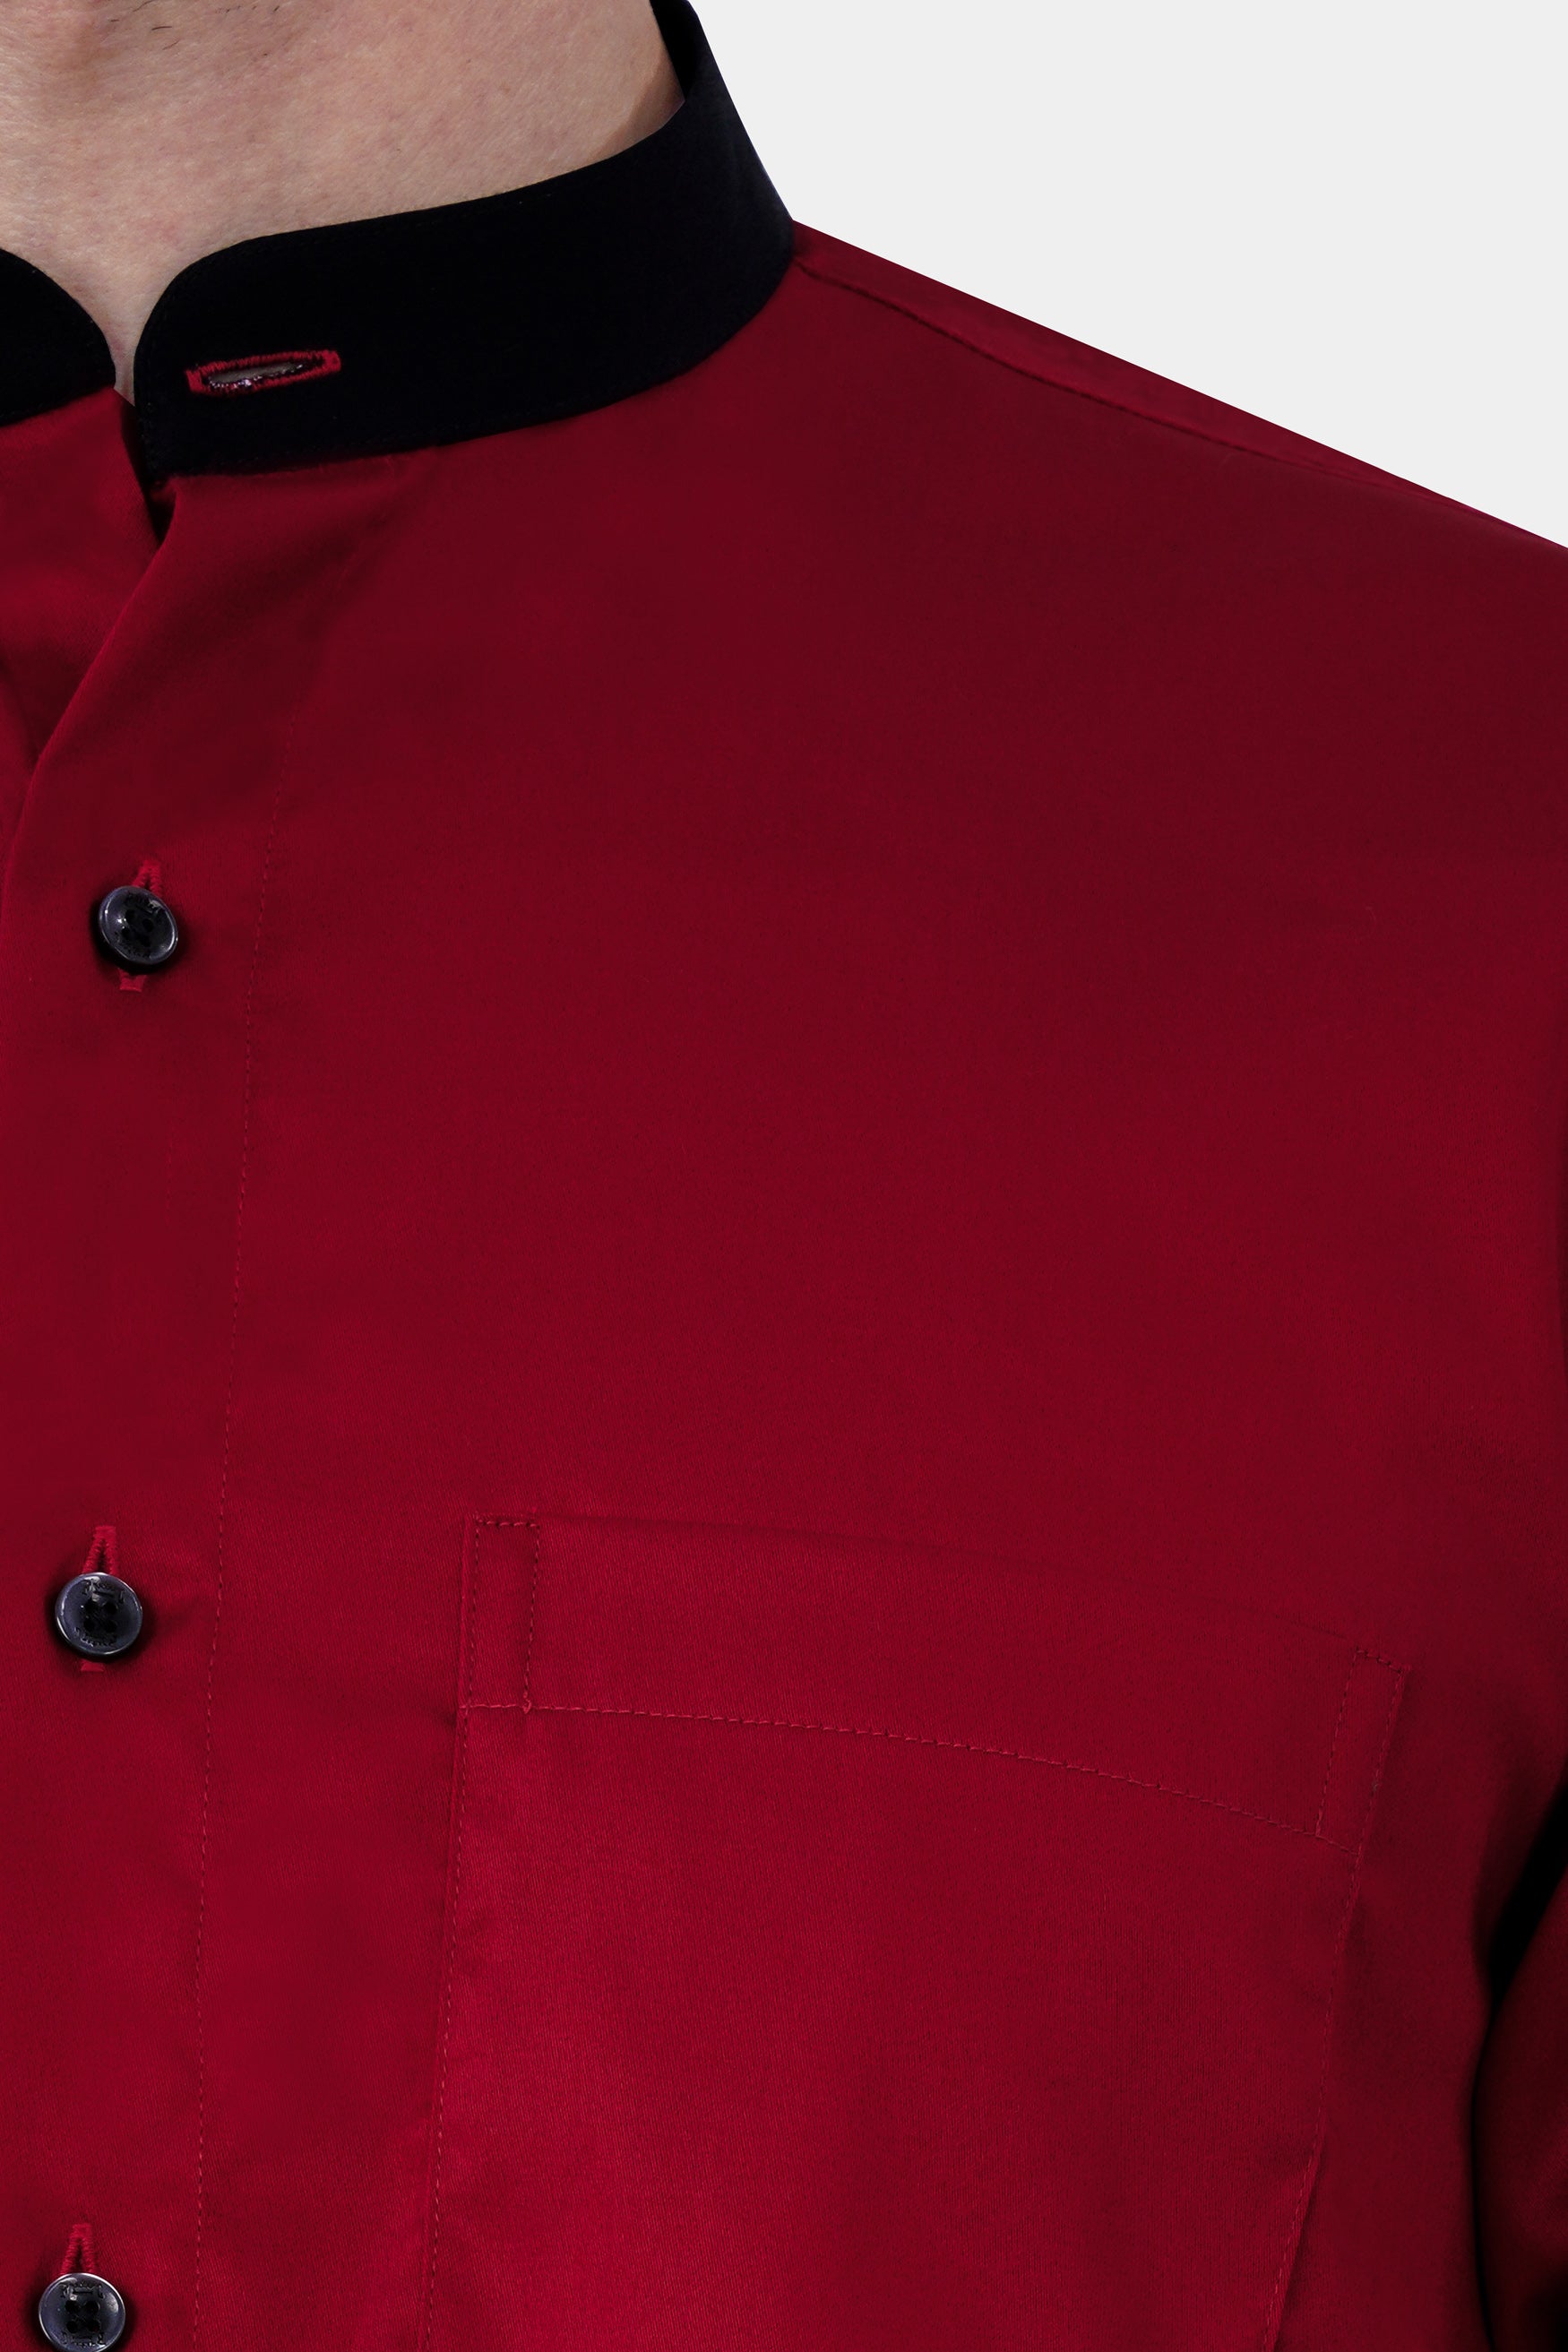 Bordeaux Red with Black Cuffs and Collar Subtle Sheen Super Soft Premium Cotton Shirt 11743-M-BCC-BLK-38, 11743-M-BCC-BLK-H-38, 11743-M-BCC-BLK-39, 11743-M-BCC-BLK-H-39, 11743-M-BCC-BLK-40, 11743-M-BCC-BLK-H-40, 11743-M-BCC-BLK-42, 11743-M-BCC-BLK-H-42, 11743-M-BCC-BLK-44, 11743-M-BCC-BLK-H-44, 11743-M-BCC-BLK-46, 11743-M-BCC-BLK-H-46, 11743-M-BCC-BLK-48, 11743-M-BCC-BLK-H-48, 11743-M-BCC-BLK-50, 11743-M-BCC-BLK-H-50, 11743-M-BCC-BLK-52, 11743-M-BCC-BLK-H-52